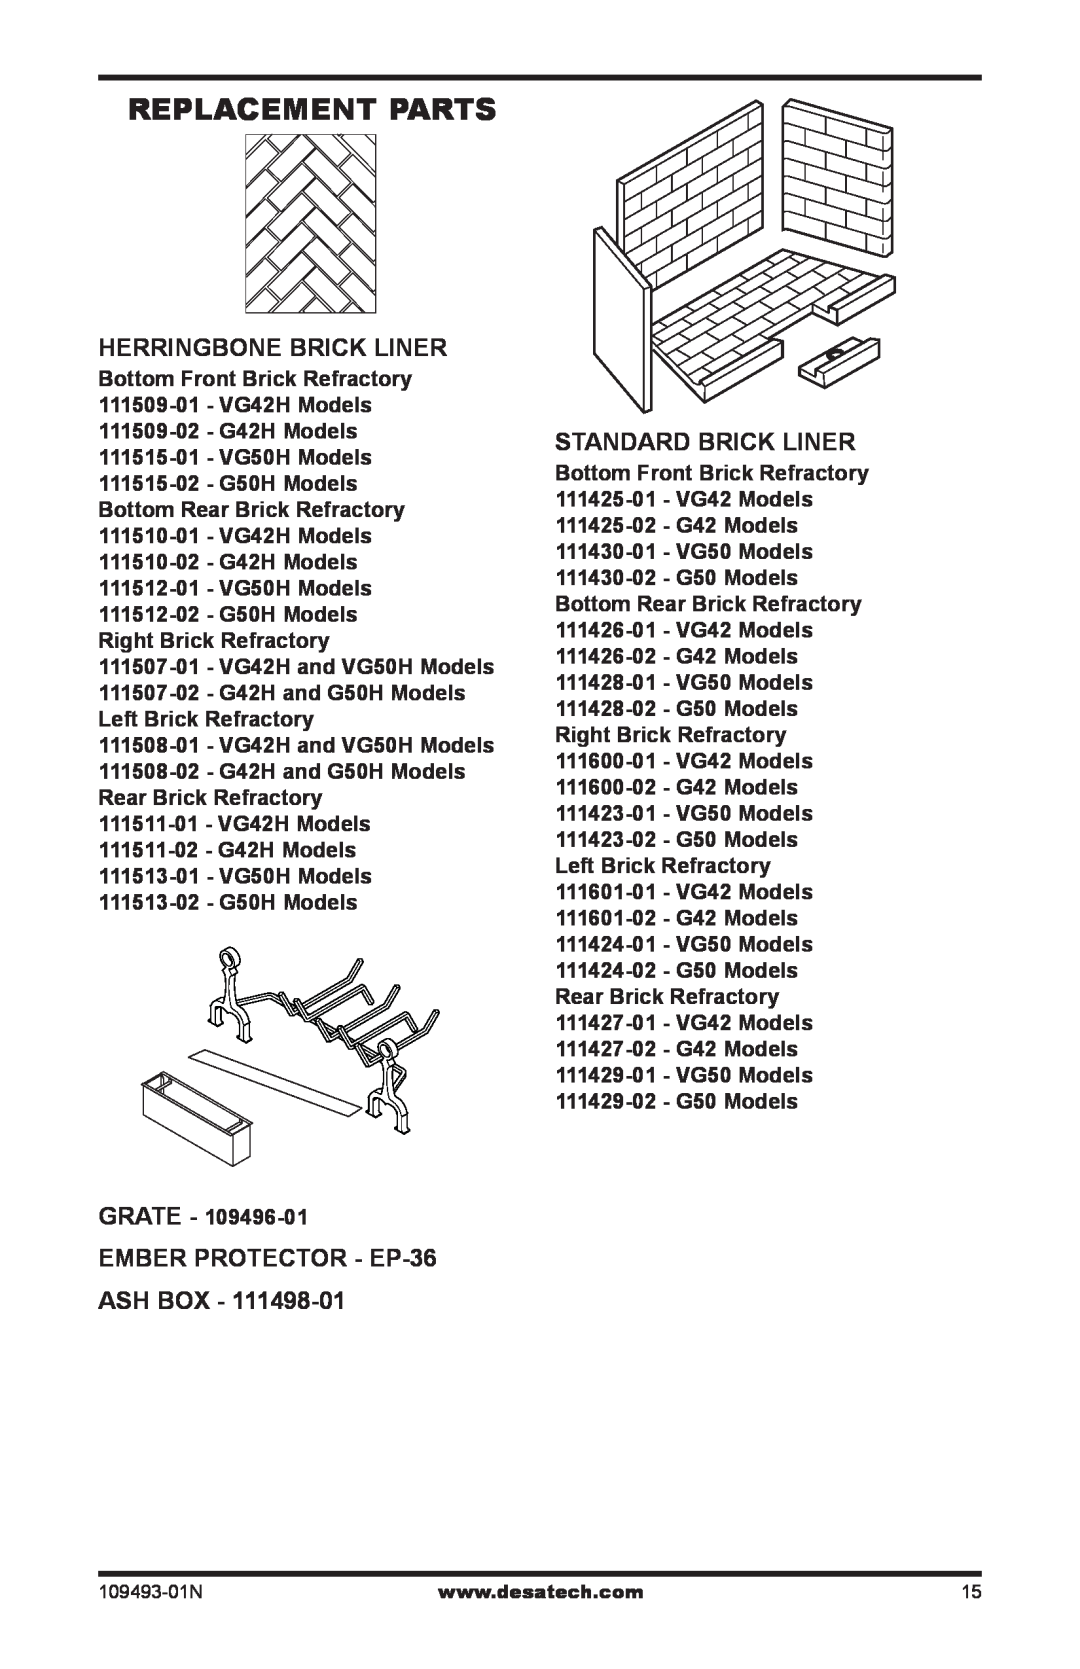 Desa (V)G42HR/50HR Replacement Parts, Herringbone Brick Liner, Ember Protector - EP-36 Ash Box, StandarD Brick Liner 